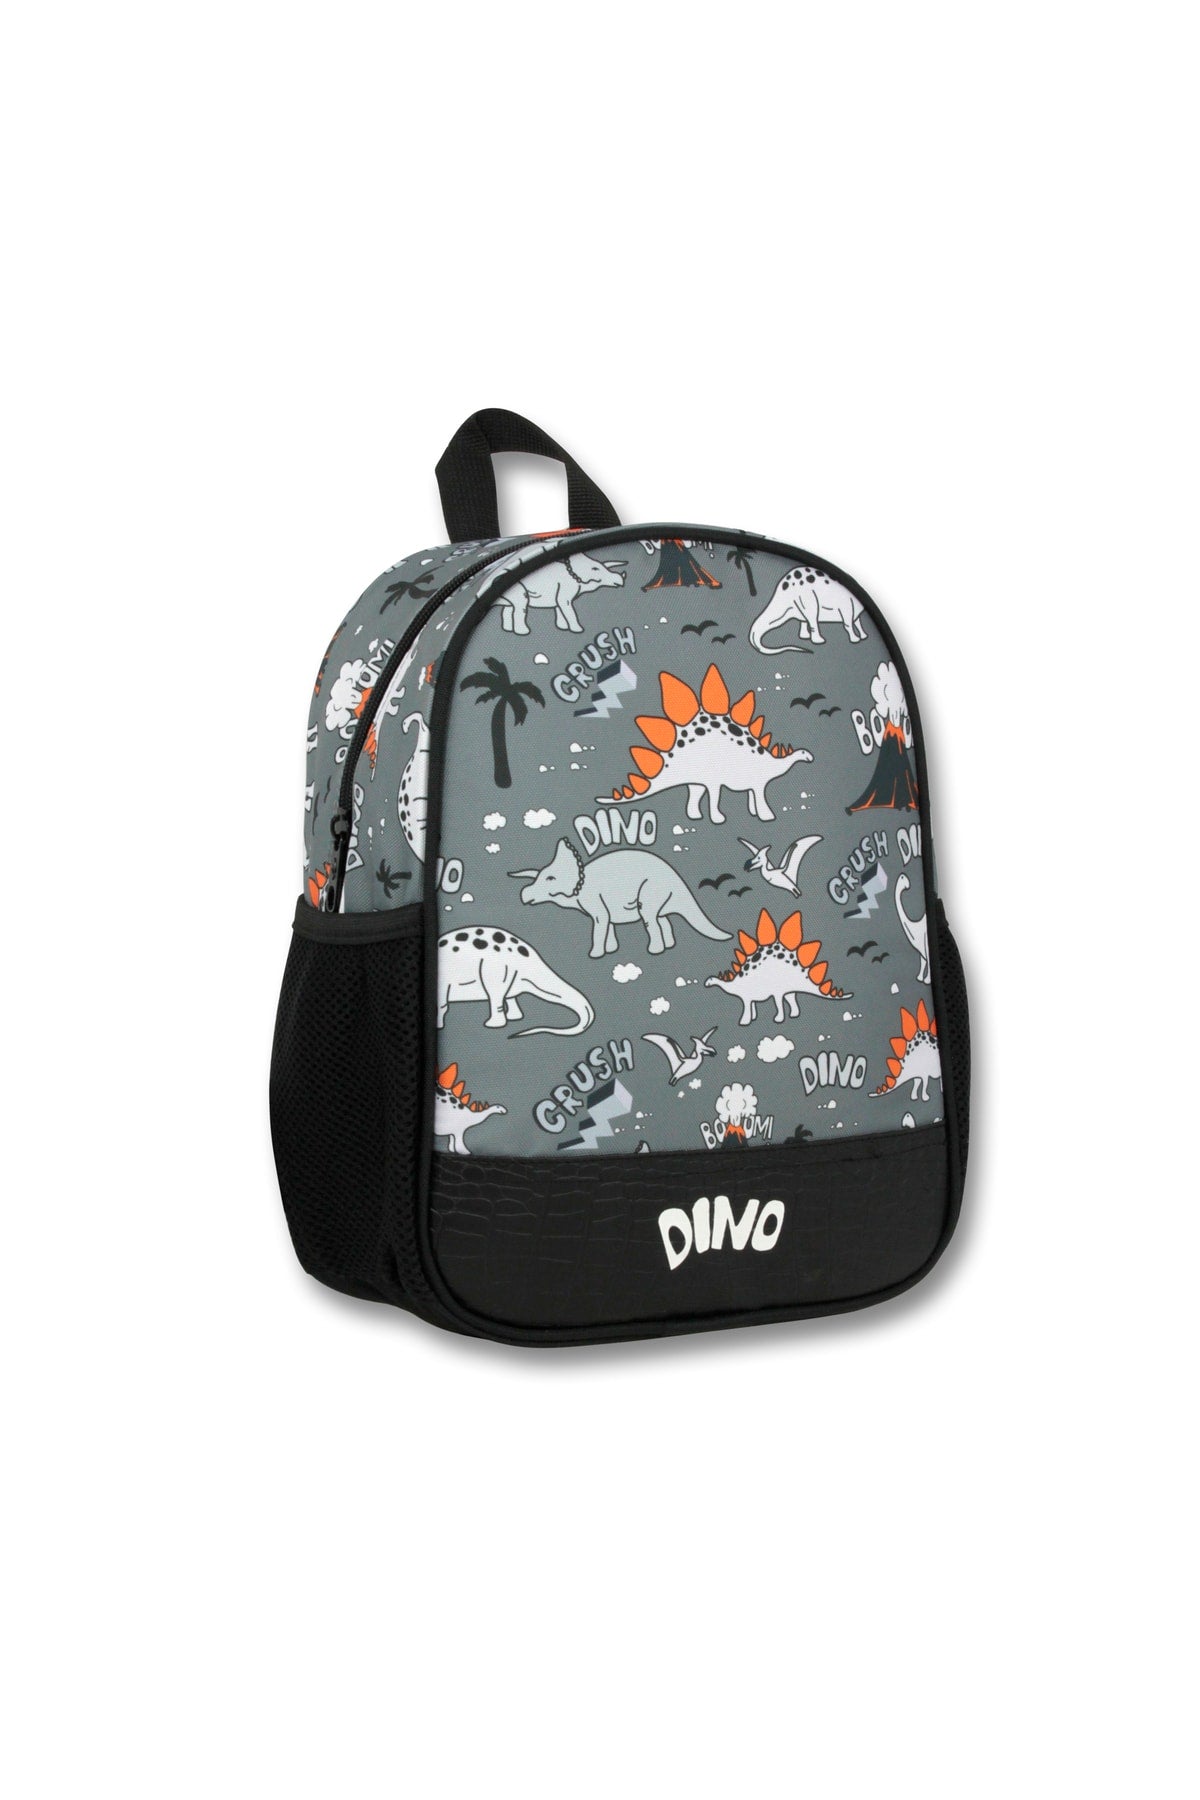 -Umit Bag Black Gray Dinosaur Kindergarten Bag Lunch Box And Pencil Bag Set